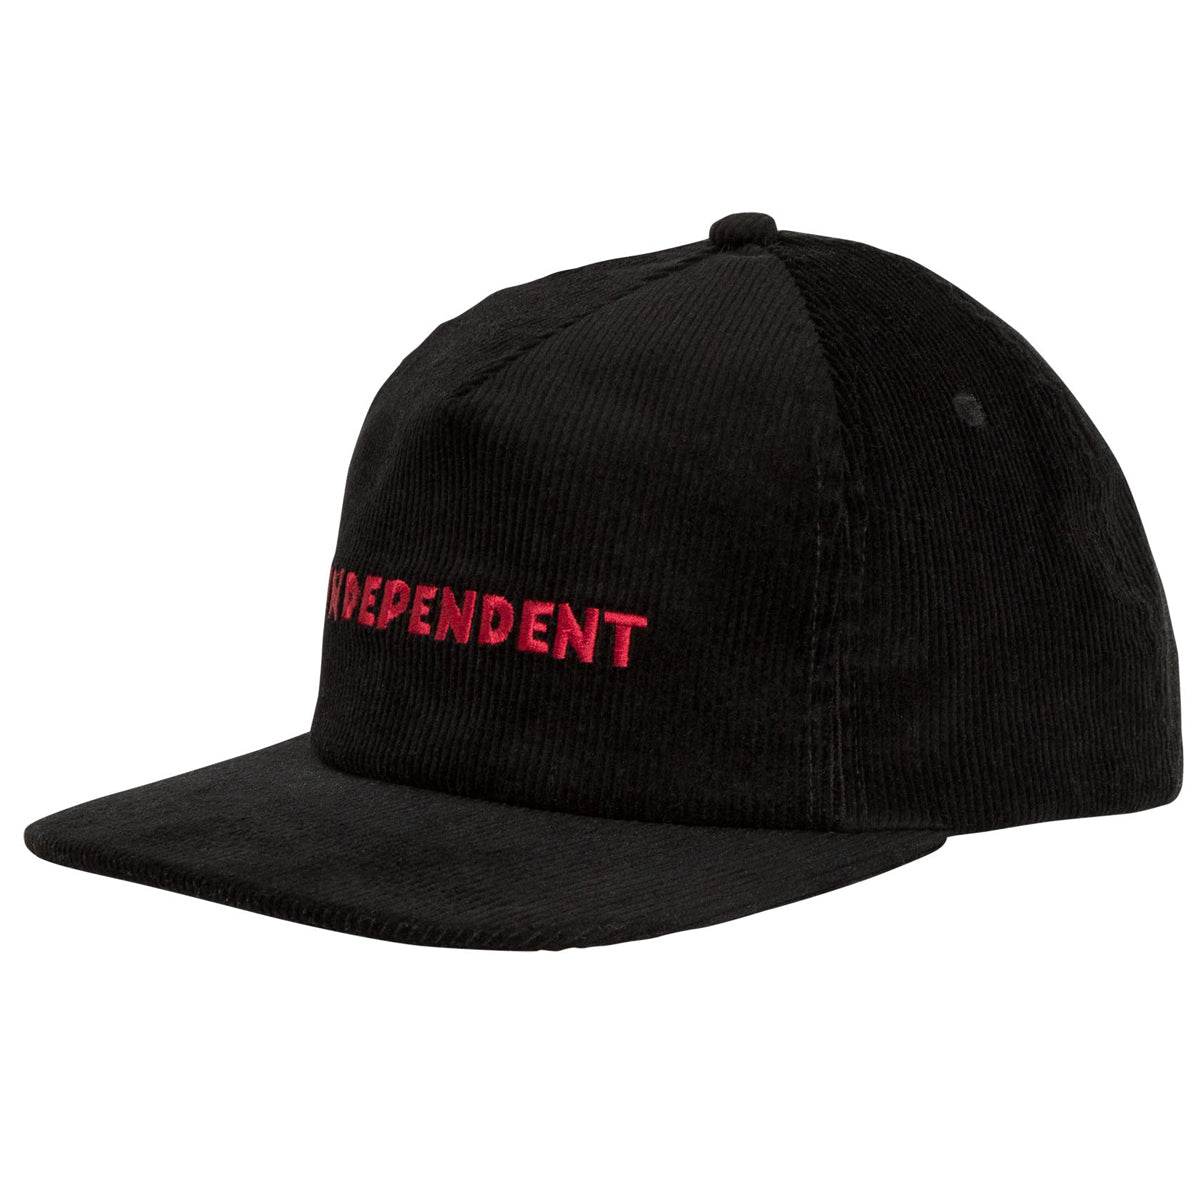 Independent Beacon Snapback Mid Profile Hat - Black image 1